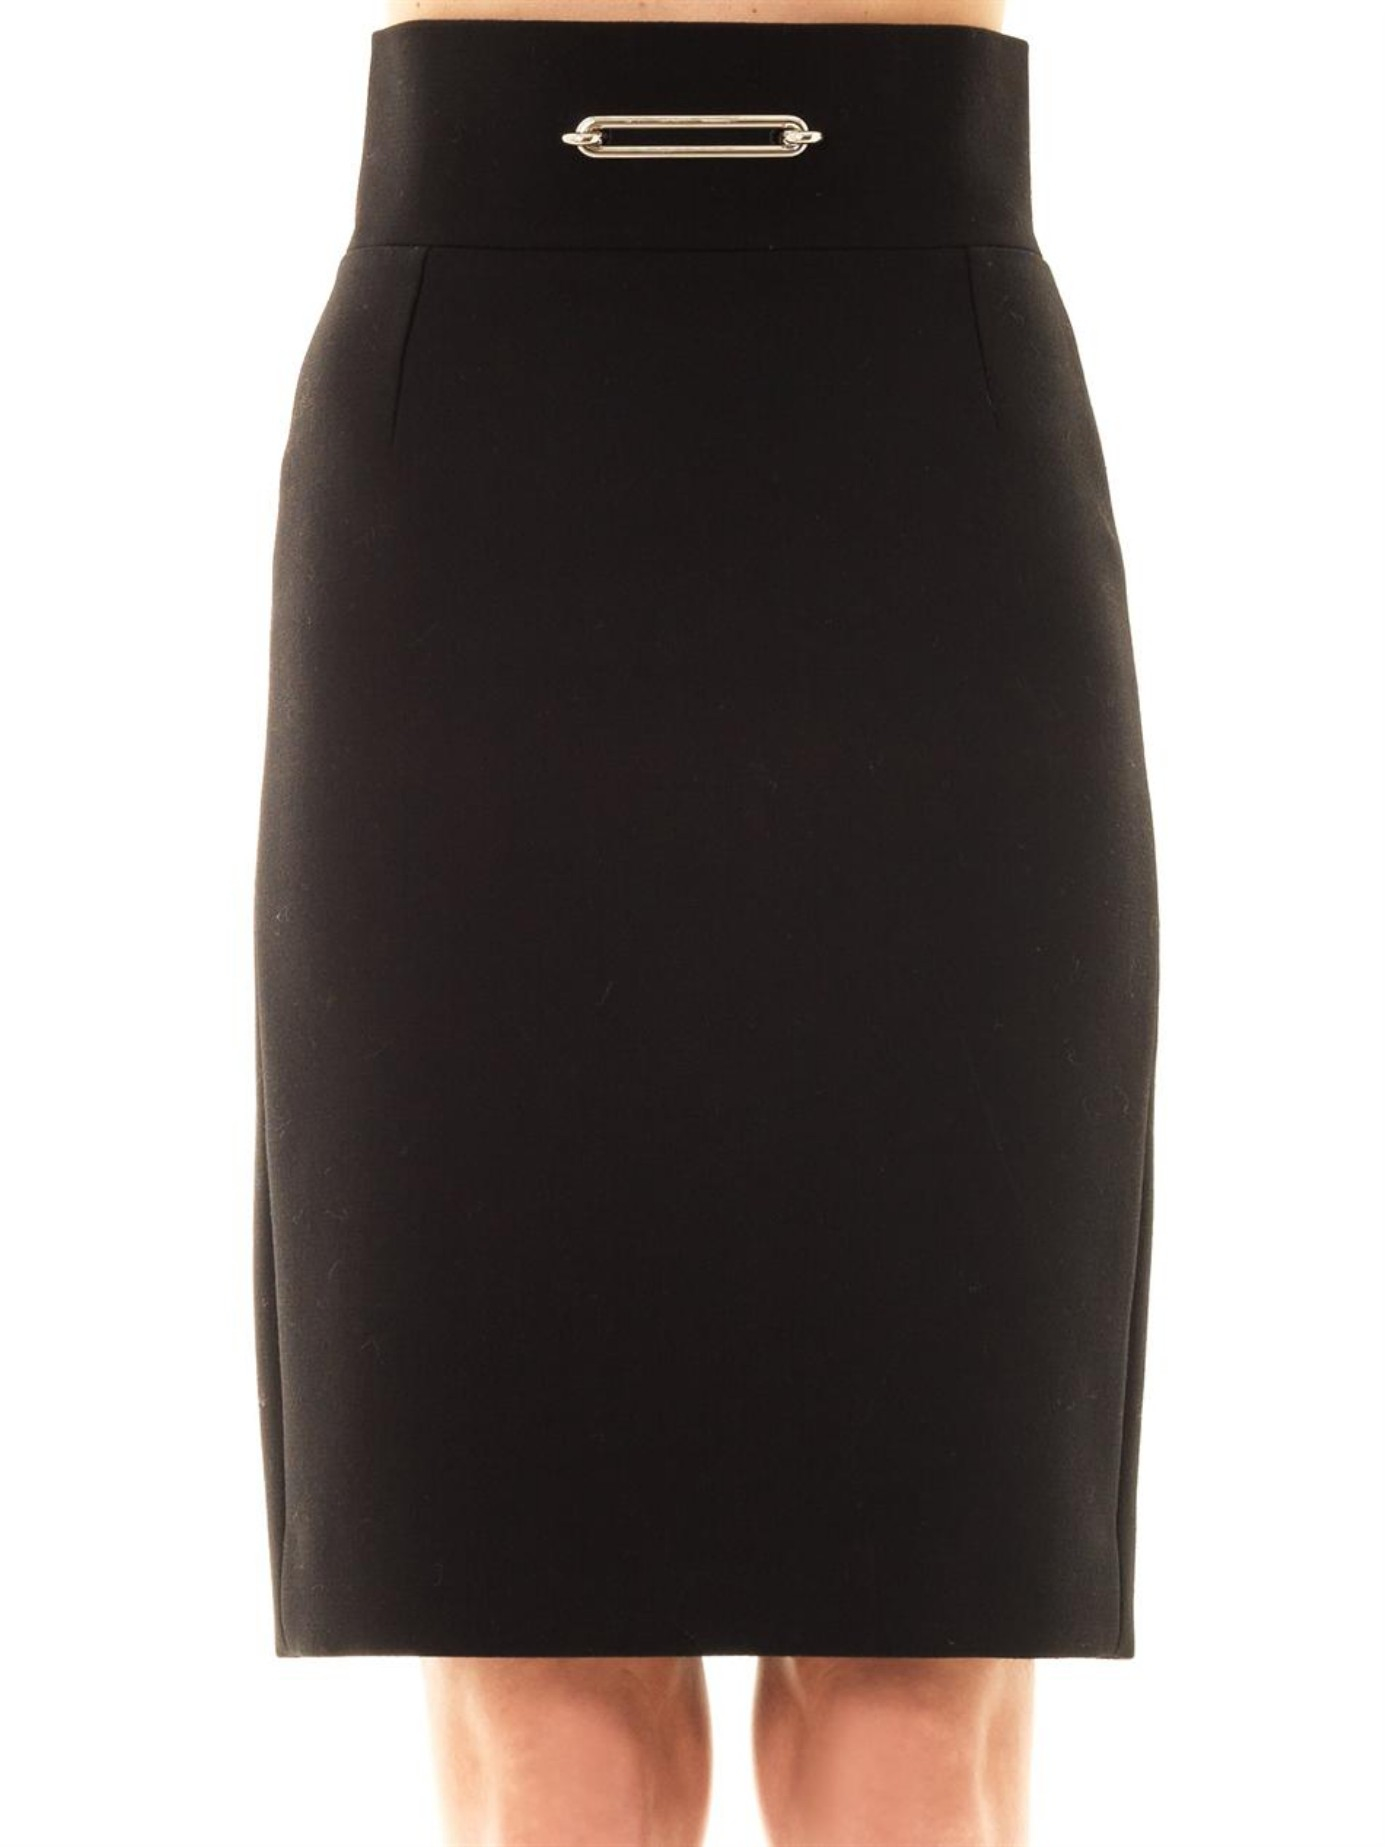 Lyst - Balenciaga Wool Pencil Skirt in Black